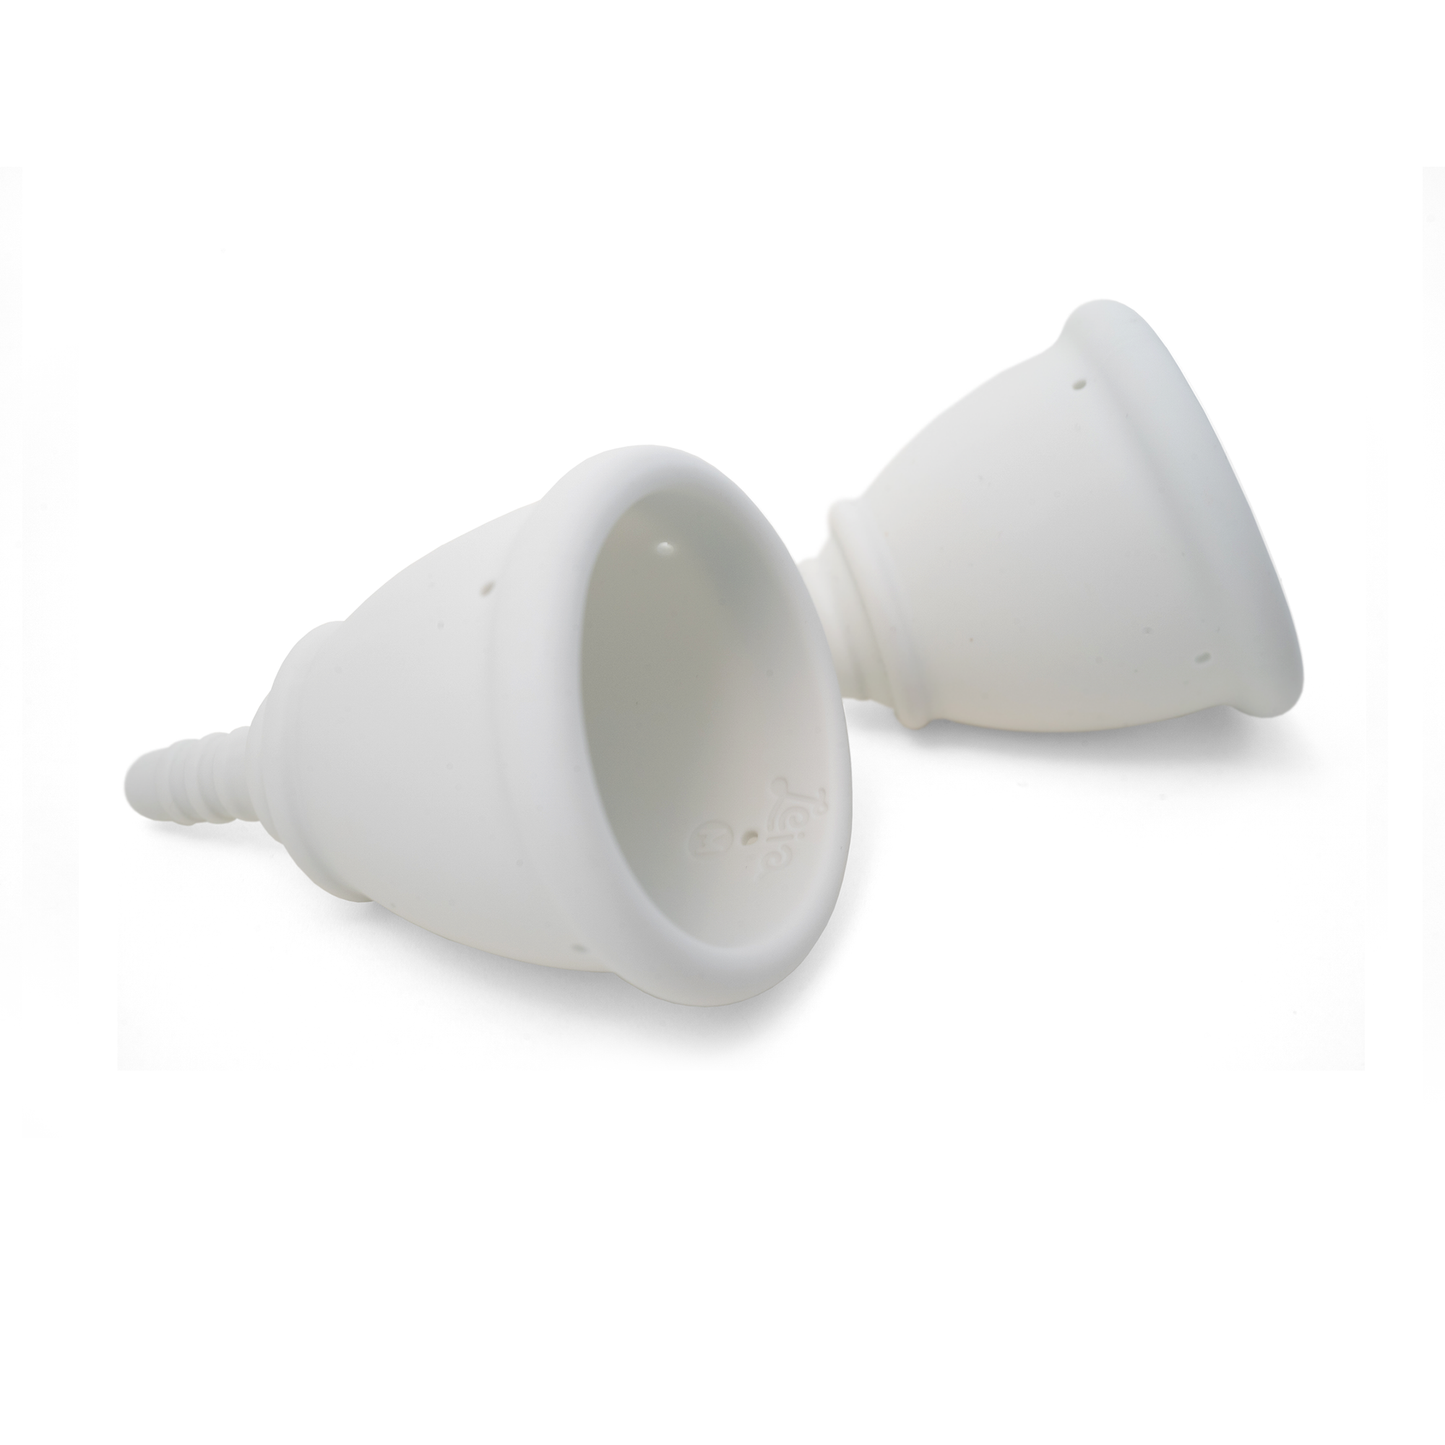 OB/GYN Designed LEIA Menstrual Cup — Size M